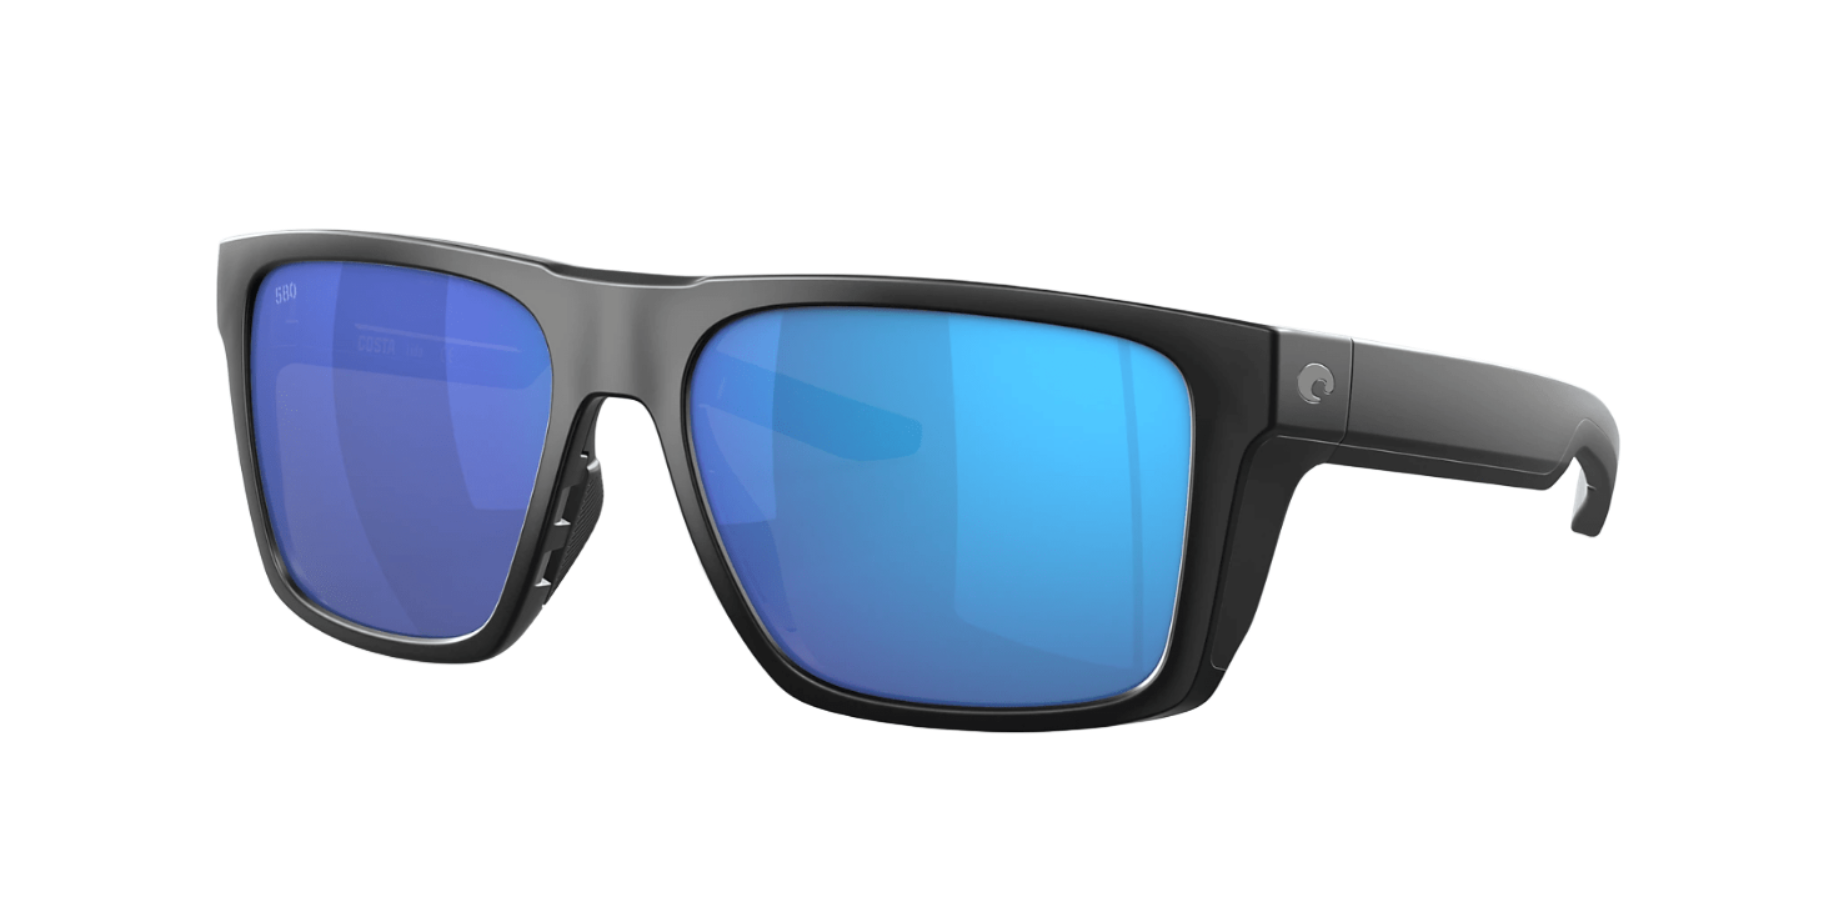 Costa Del Mar Sunglasses Matte Black / Blue Mirror Costa Del Mar Lido Matte Black Frame/Blue Mirror Lens Sunglasses